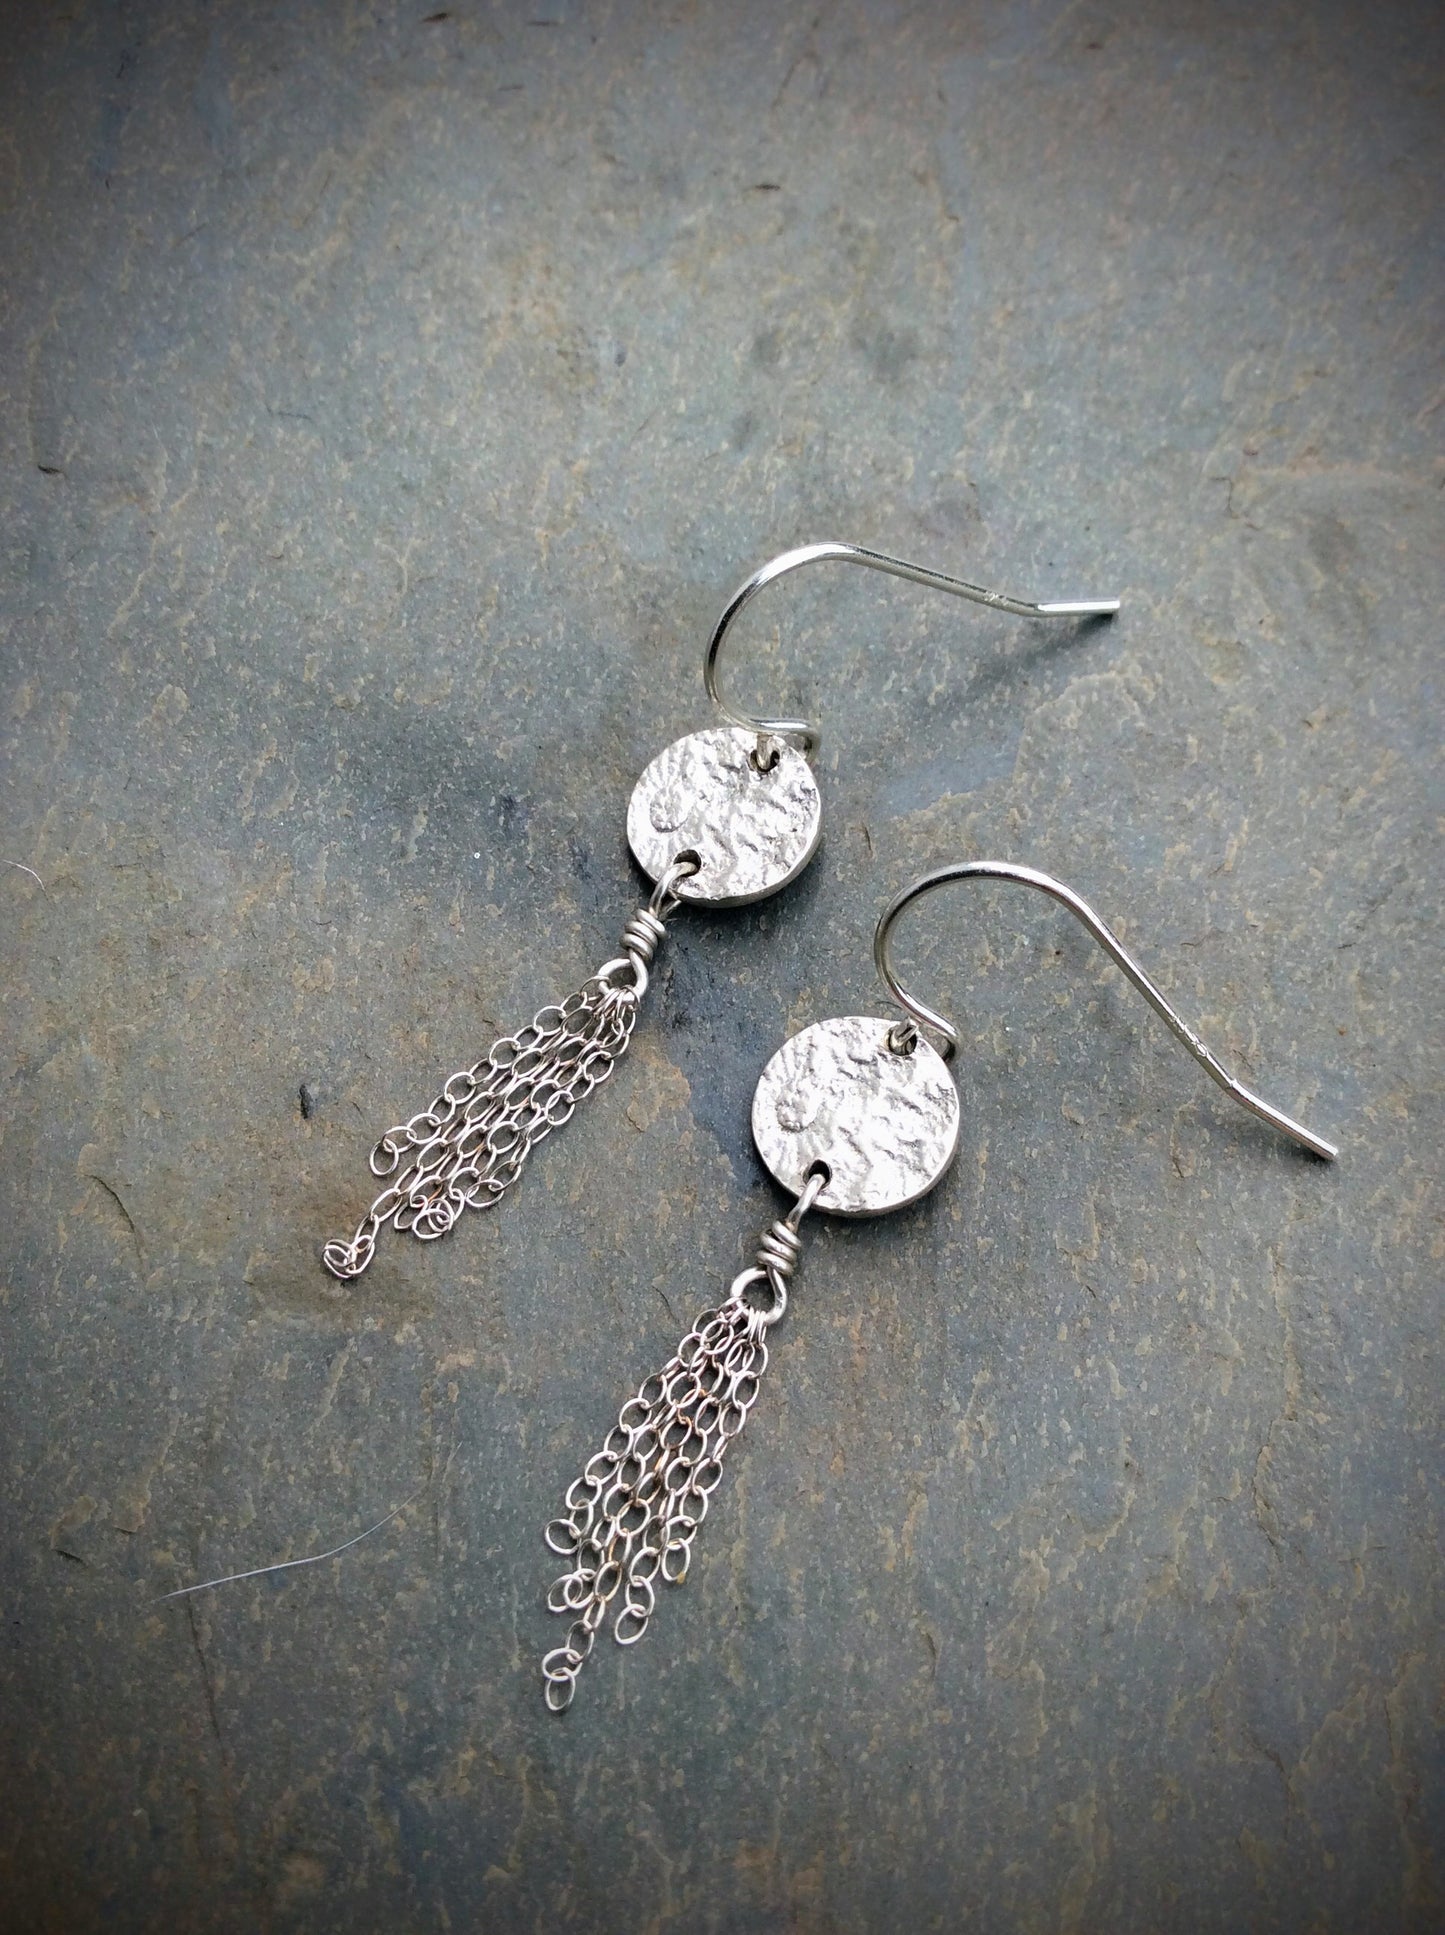 Full Moon Tassel Earrings - Sterling Silver or Bronze with 14 Karart Gold Filled